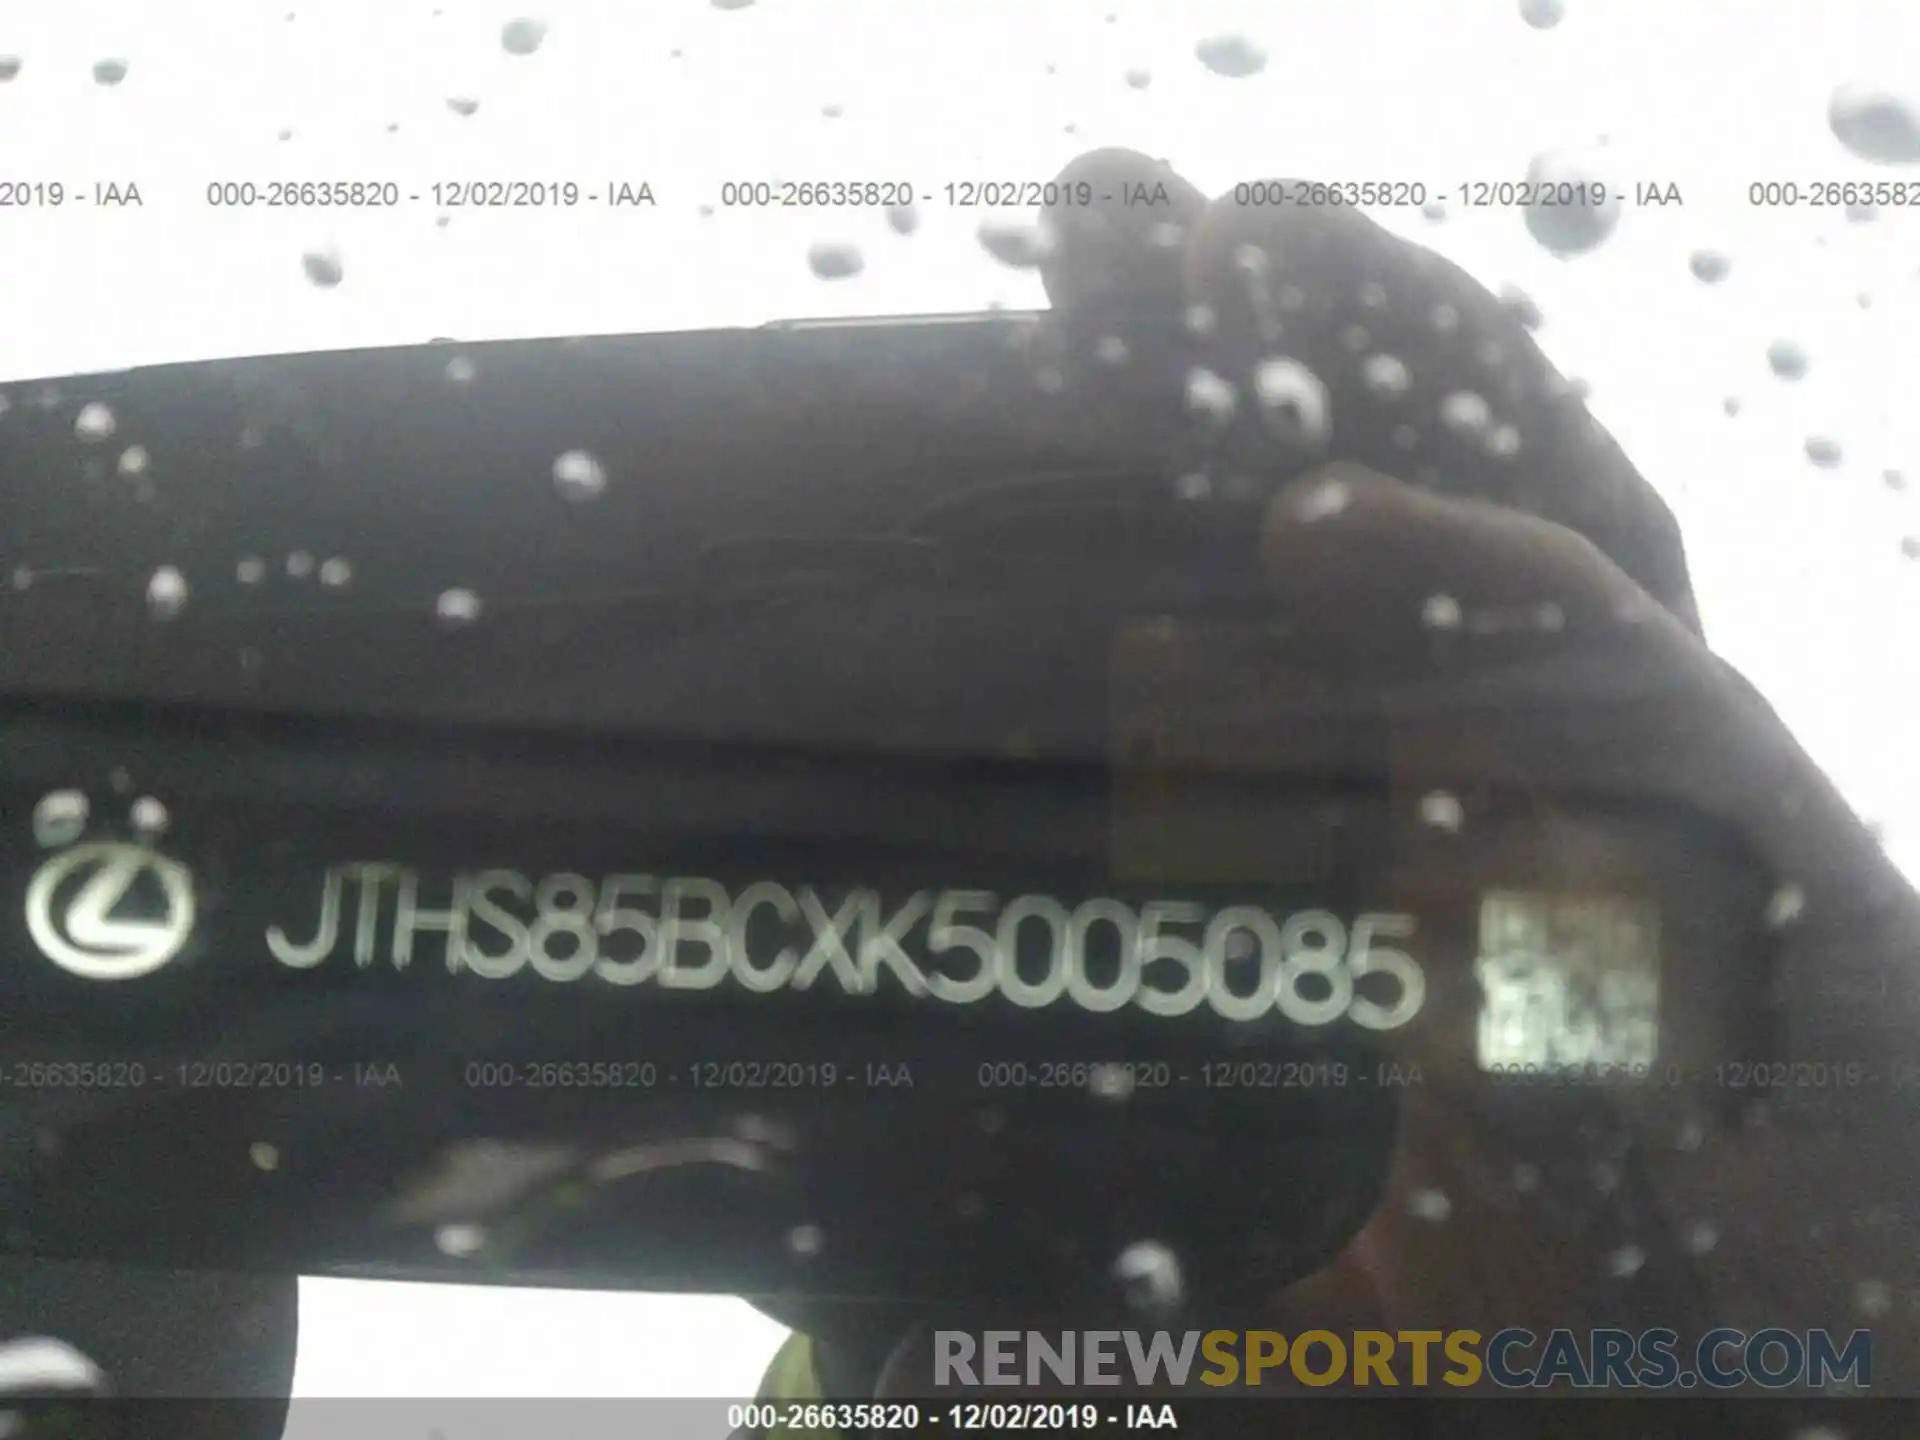 9 Photograph of a damaged car JTHS85BCXK5005085 LEXUS RC 2019